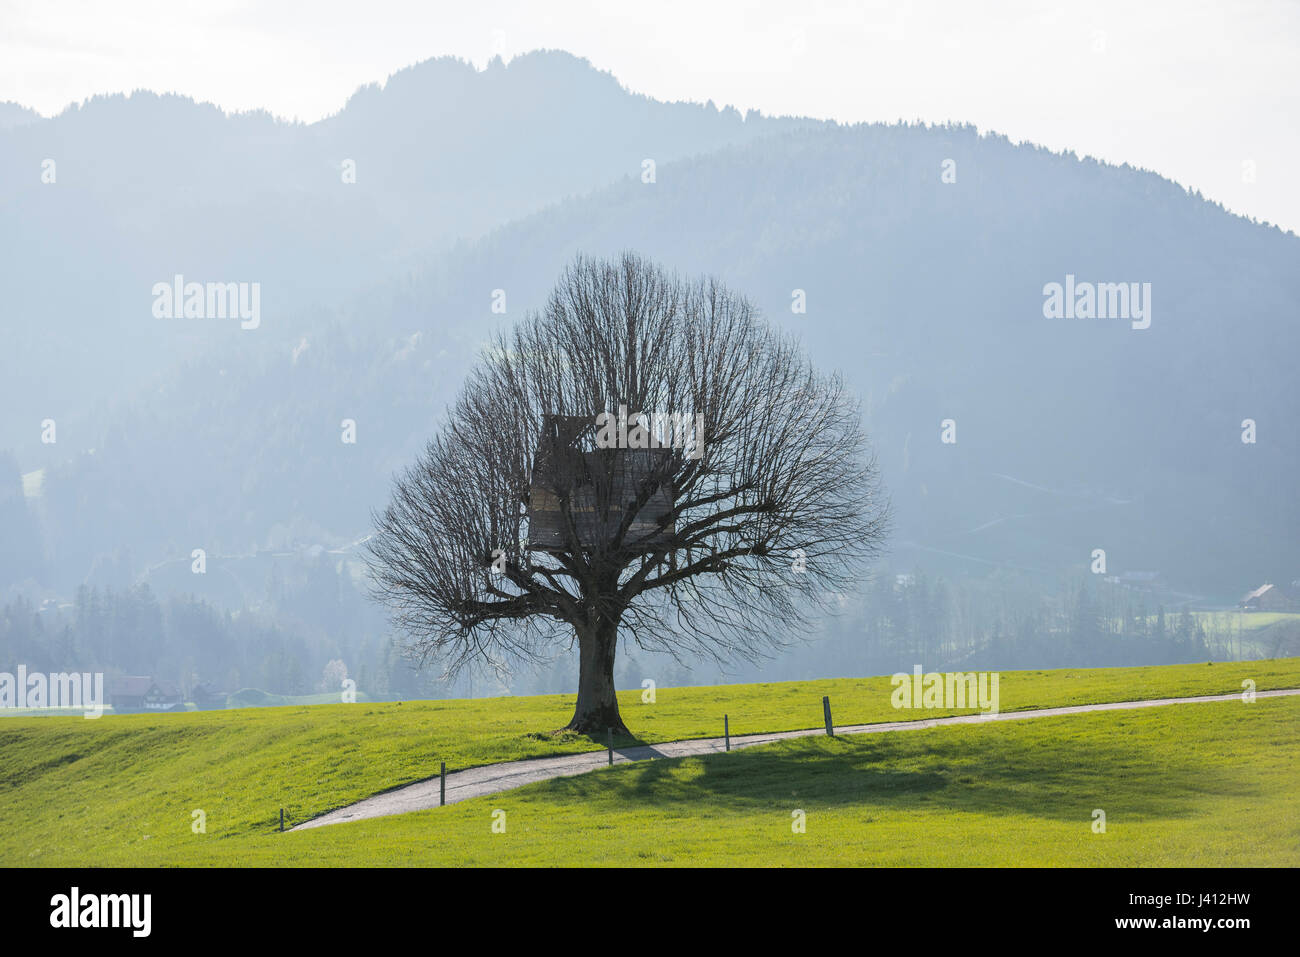 A children's play house built into a tree on farmland near the Swiss town of Apenzell, Switzerland. Derek Hudson / Alamy Stock Photo Stock Photo